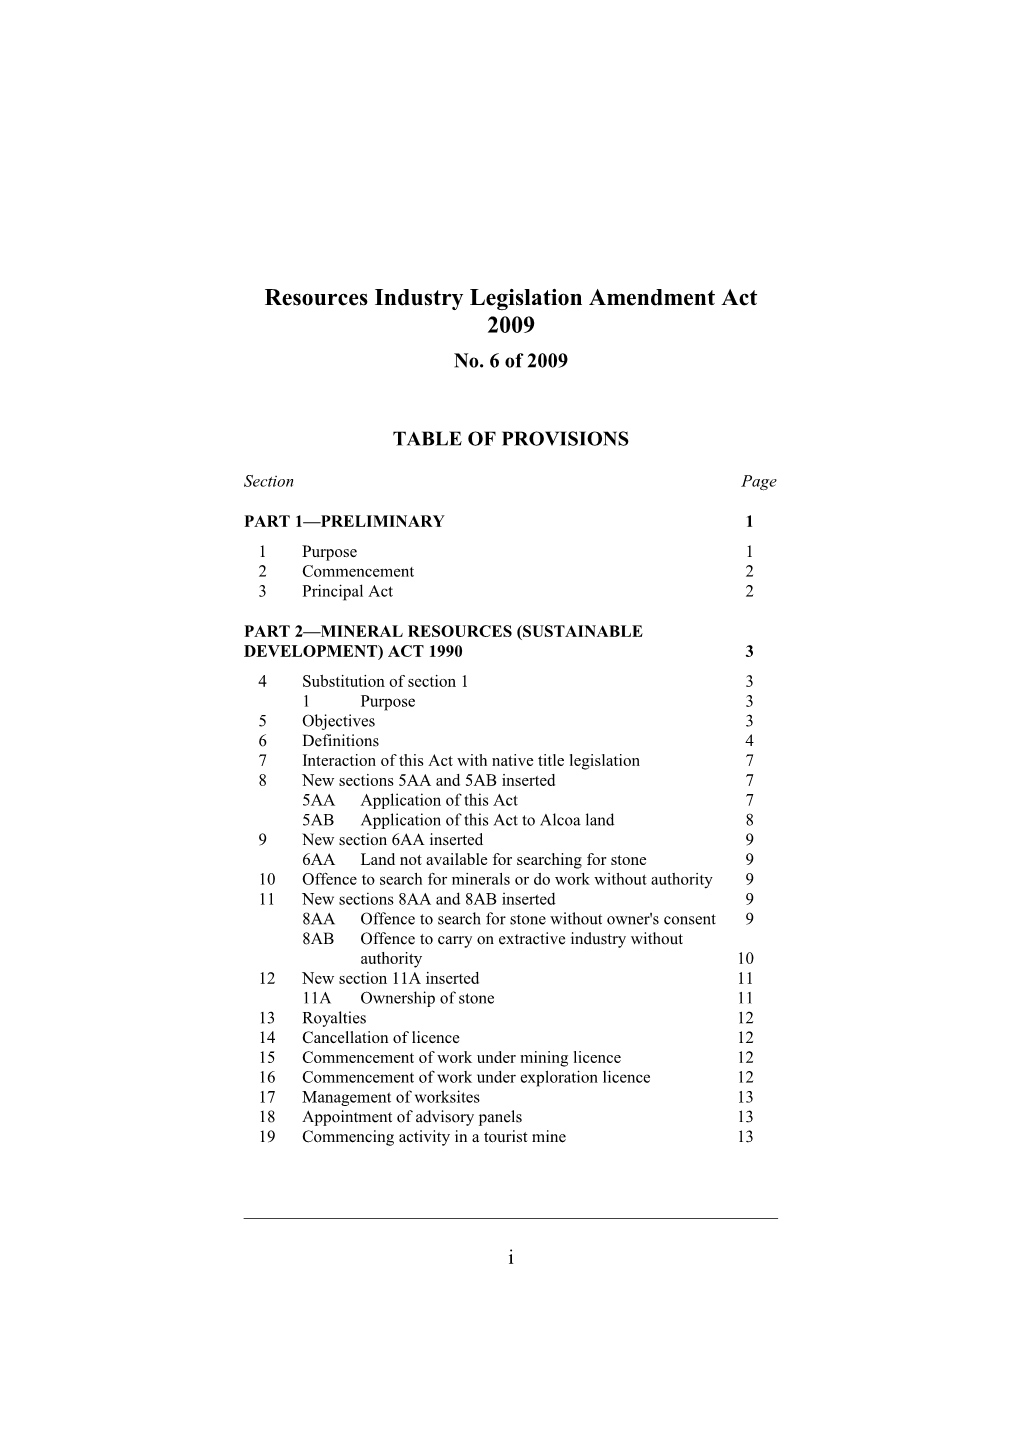 Resources Industry Legislation Amendment Act 2009